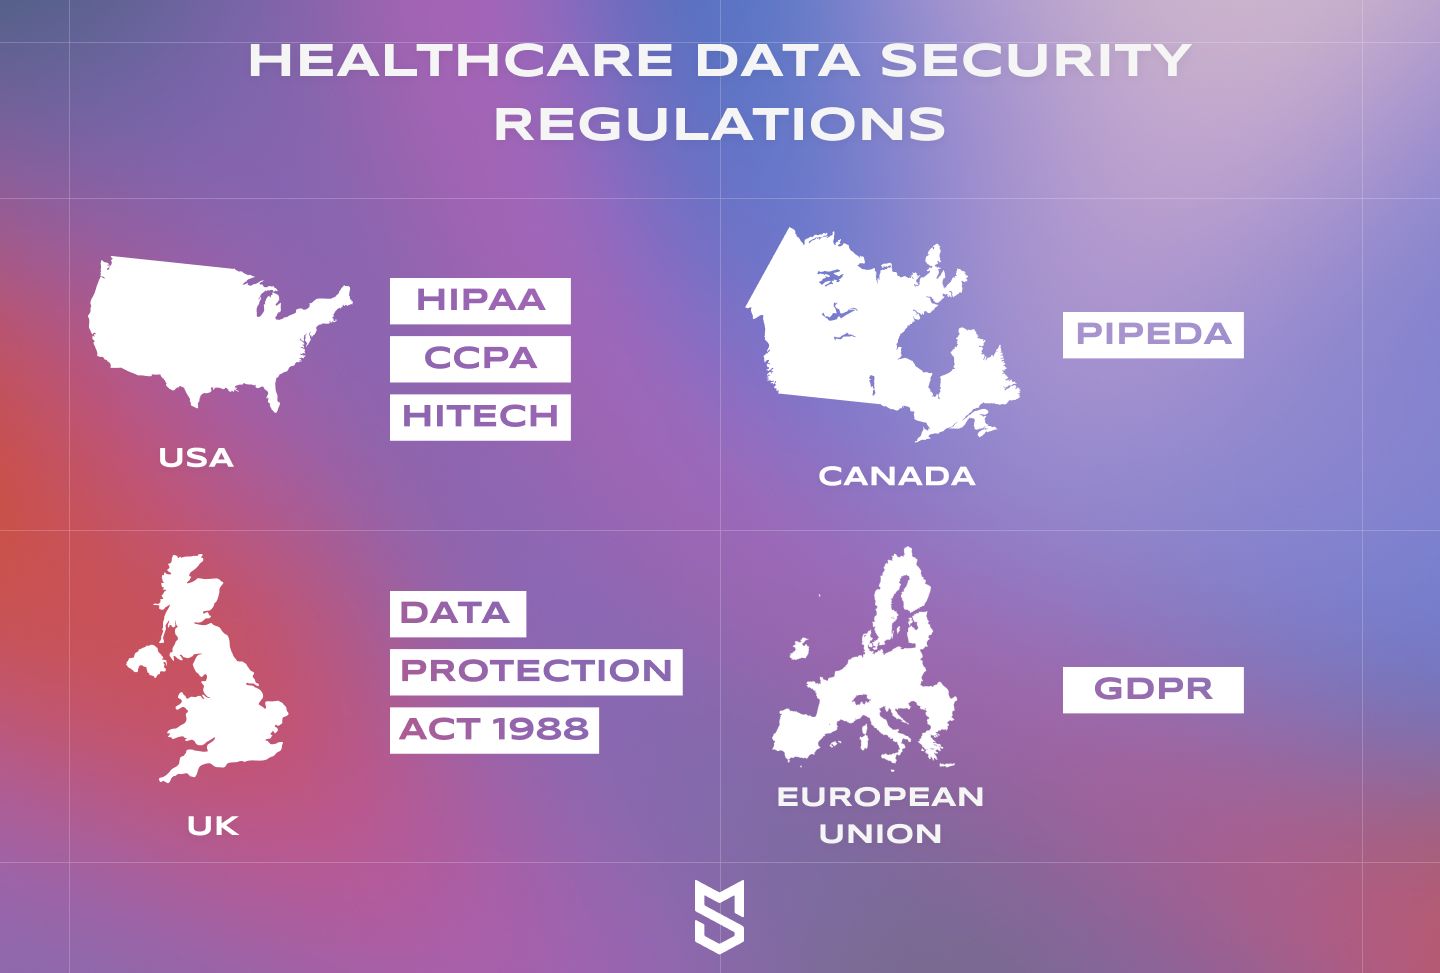 Healthcare data security regulations